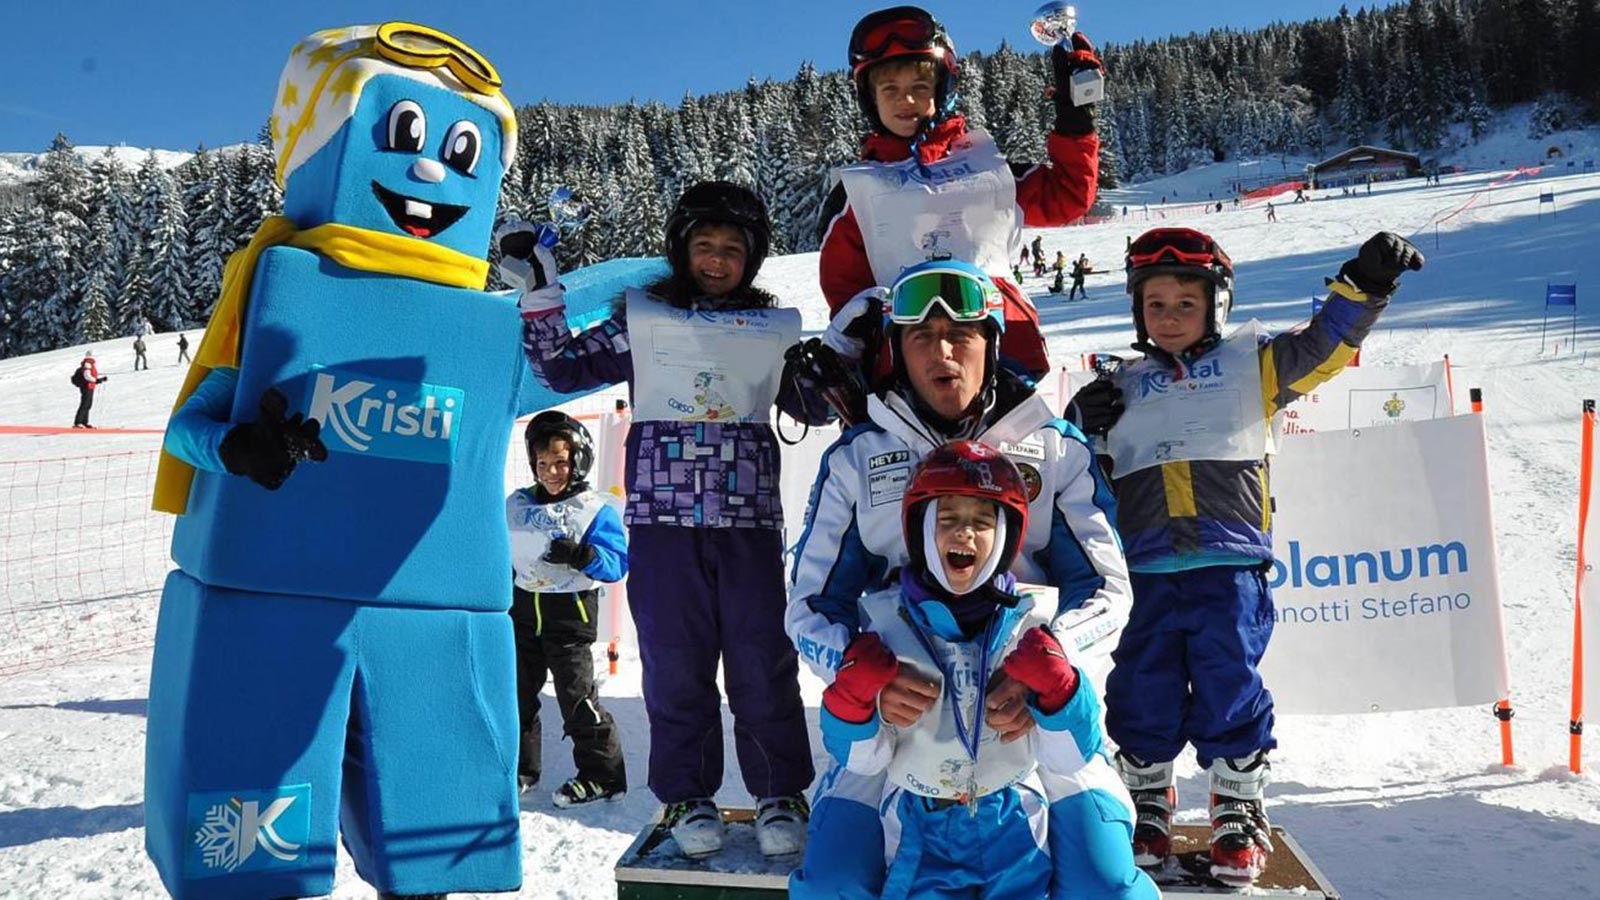 Some children with the ski teacher and the mascot Kristi in Andalo in Trentino